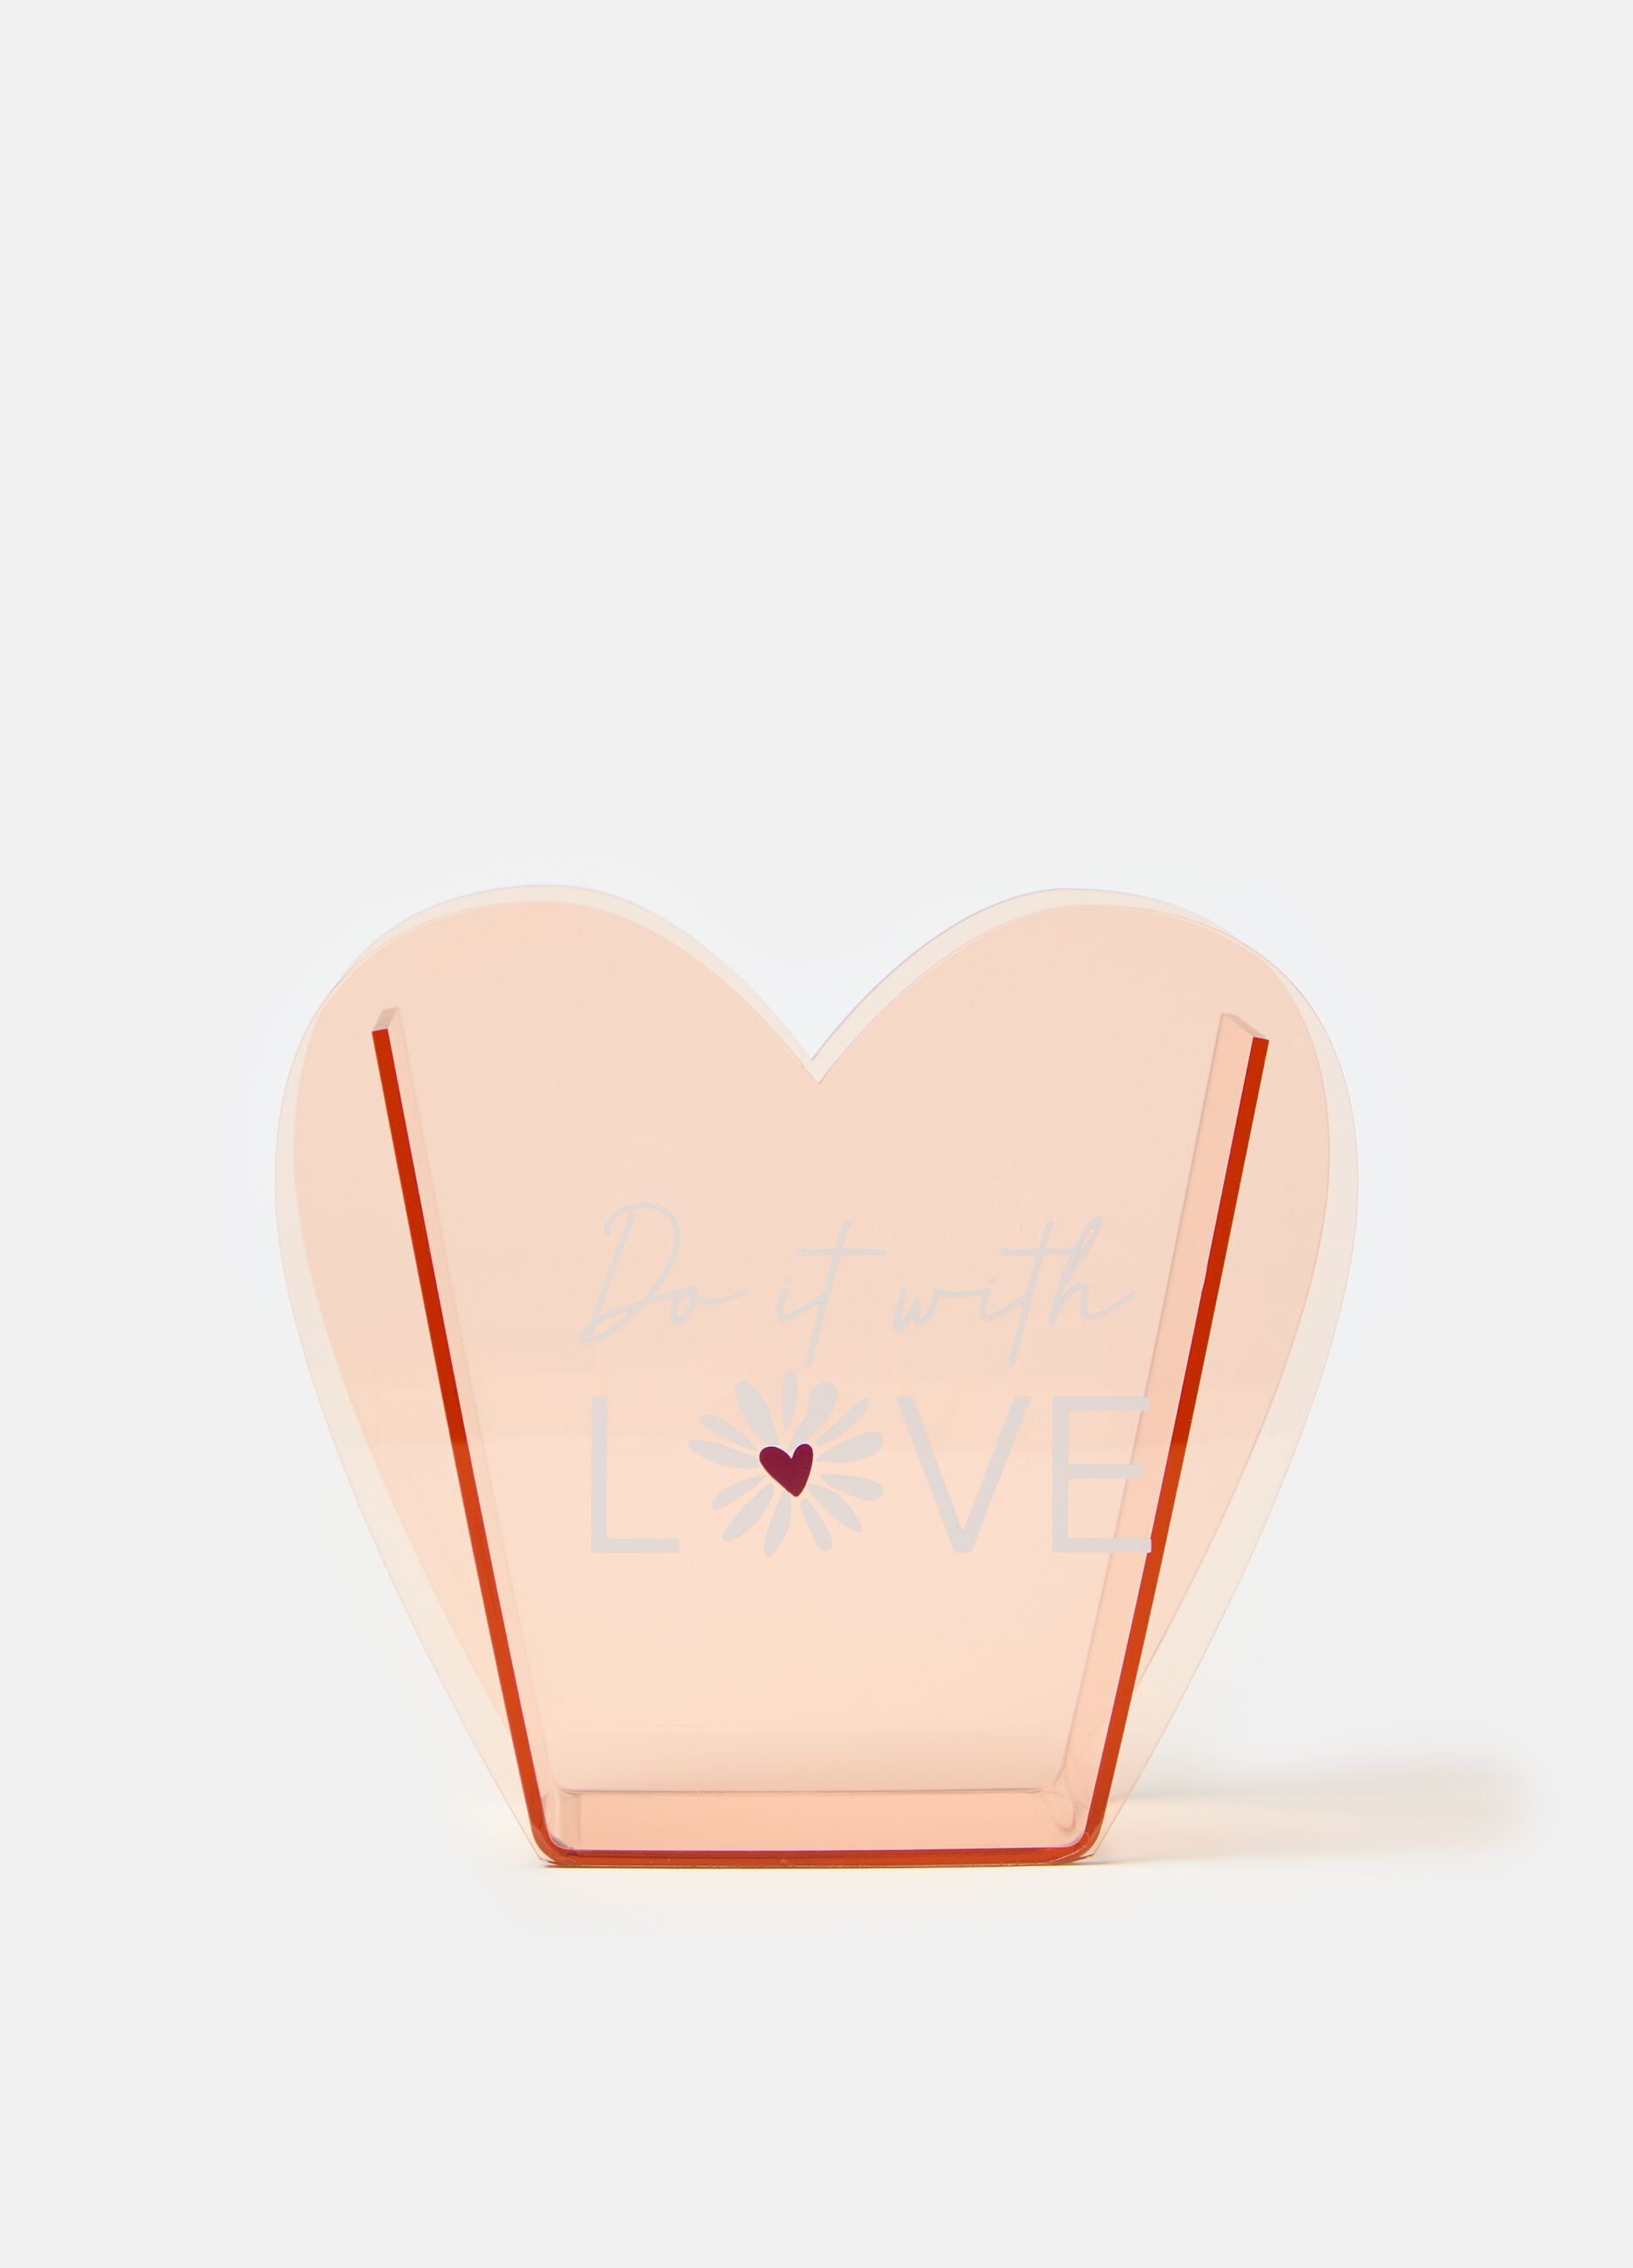 Heart-shaped vase